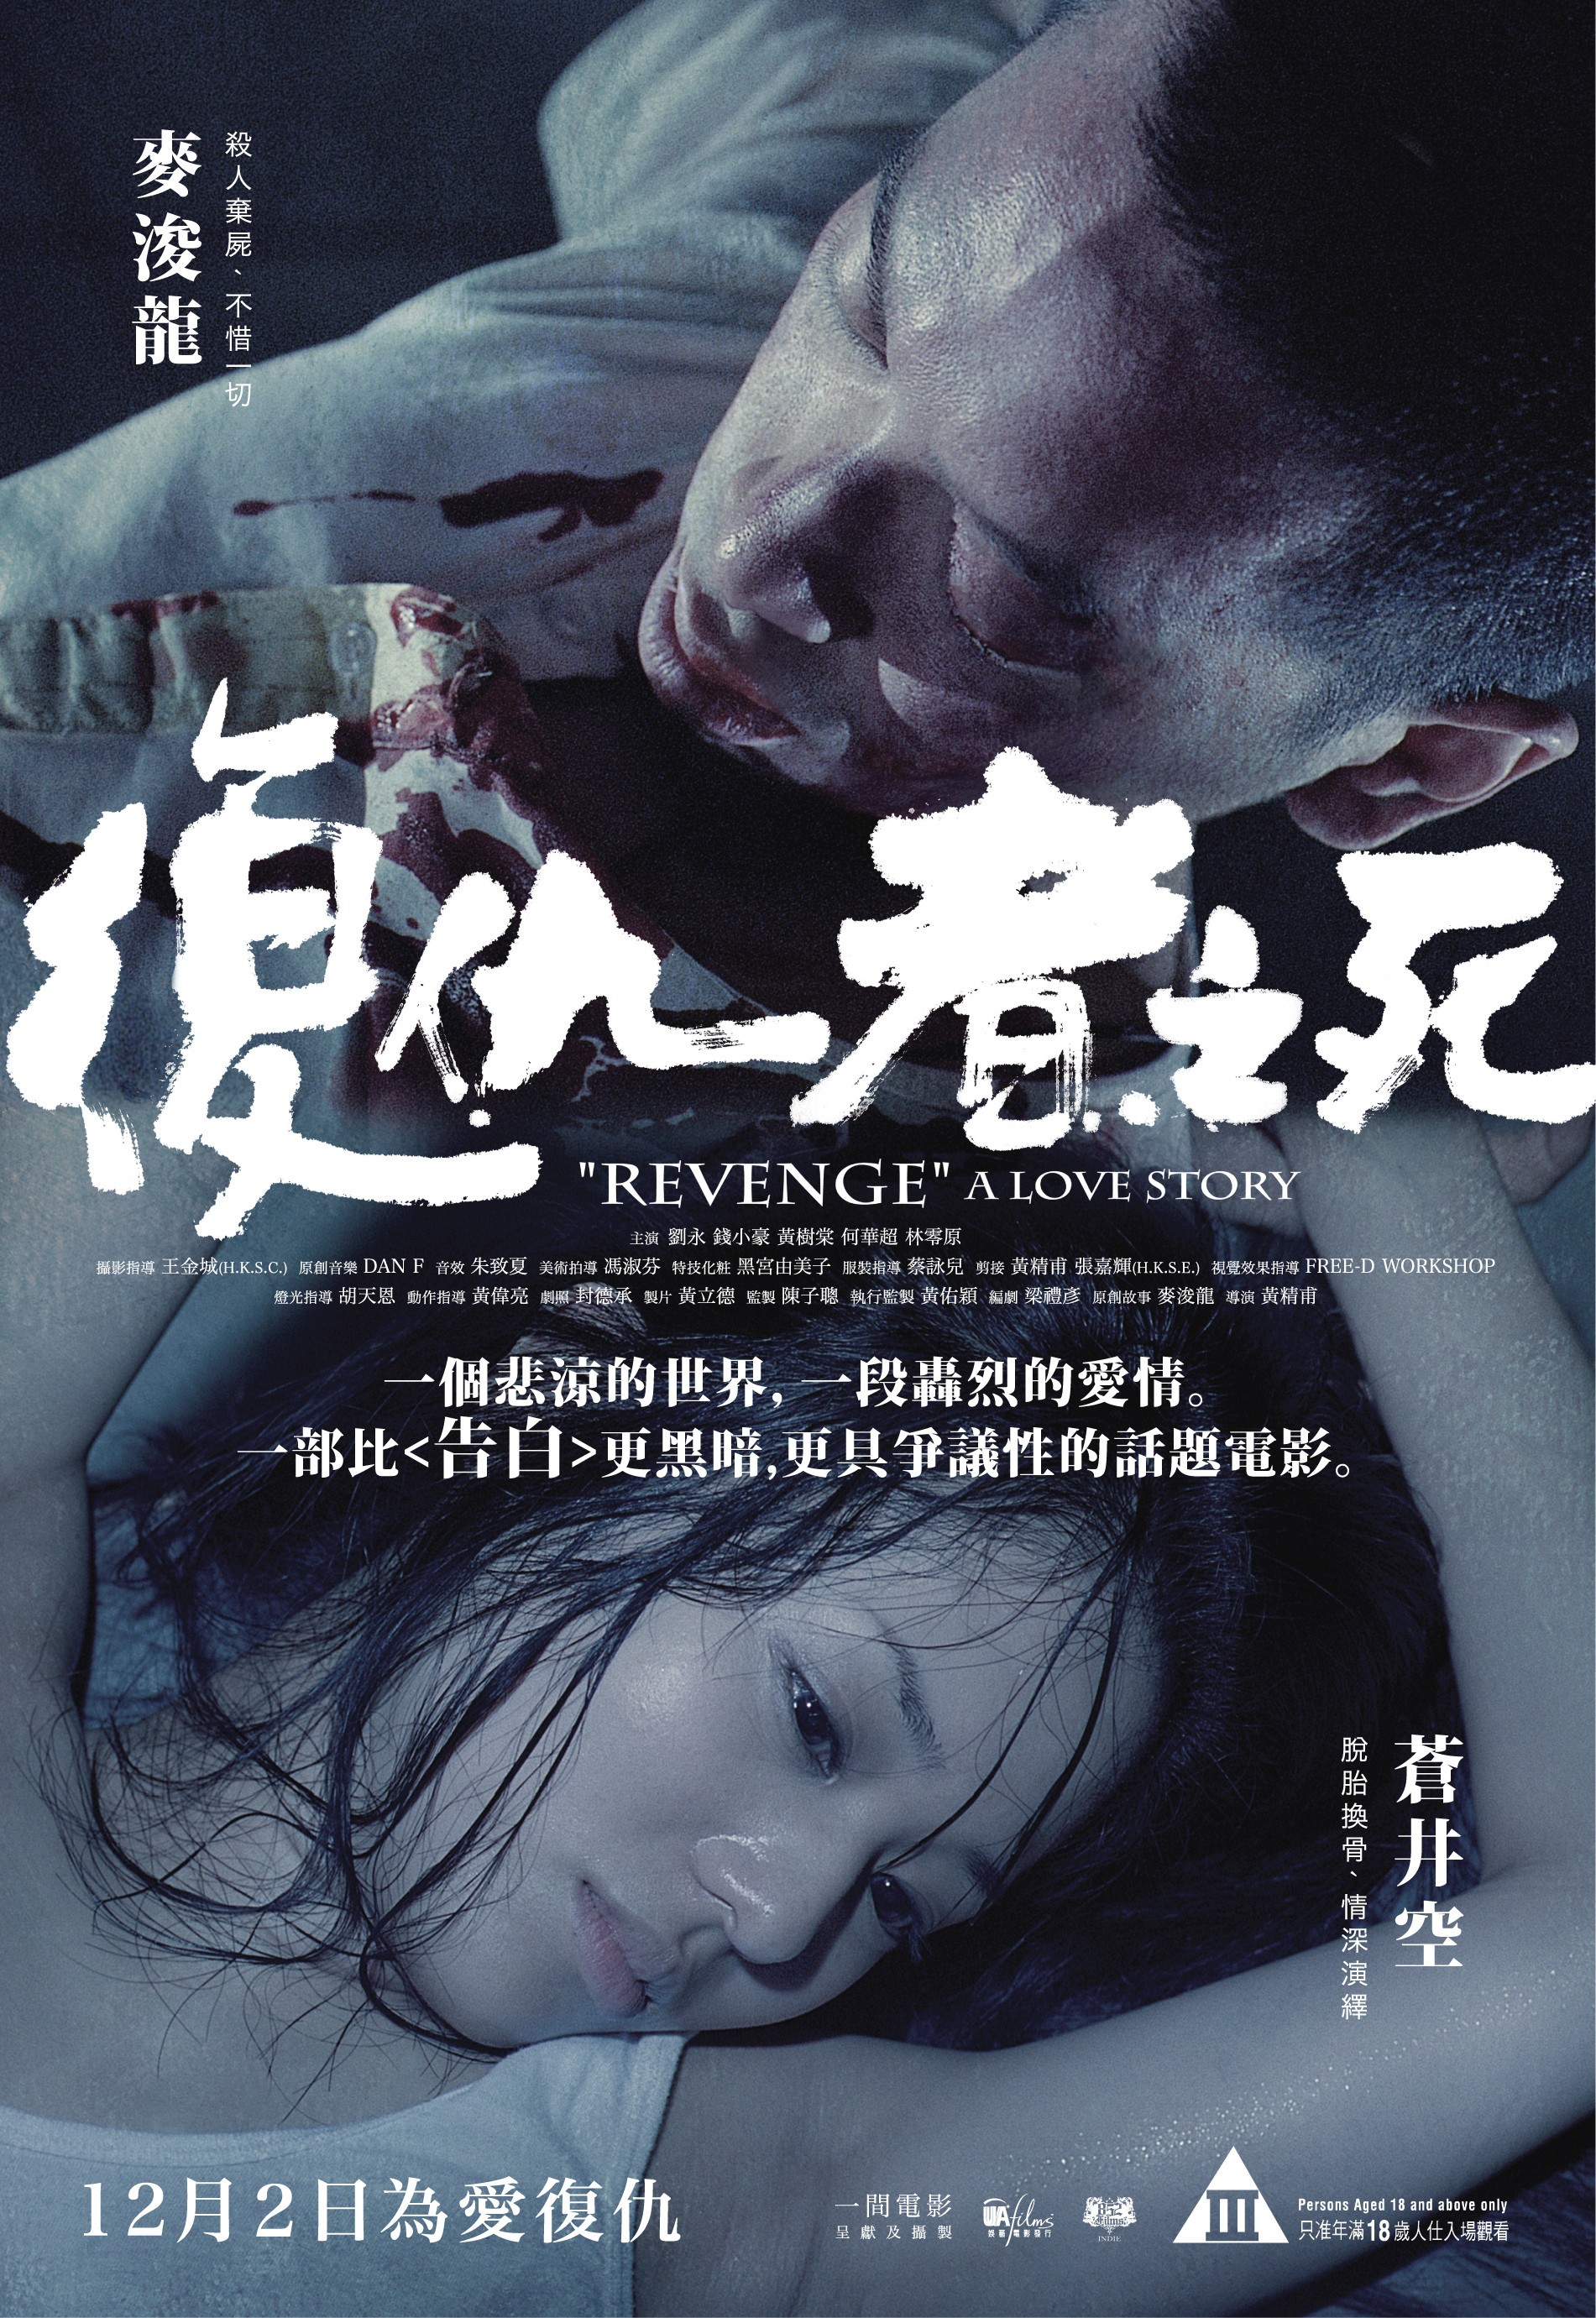 Mega Sized Movie Poster Image for Revenge: A Love Story (#1 of 2)